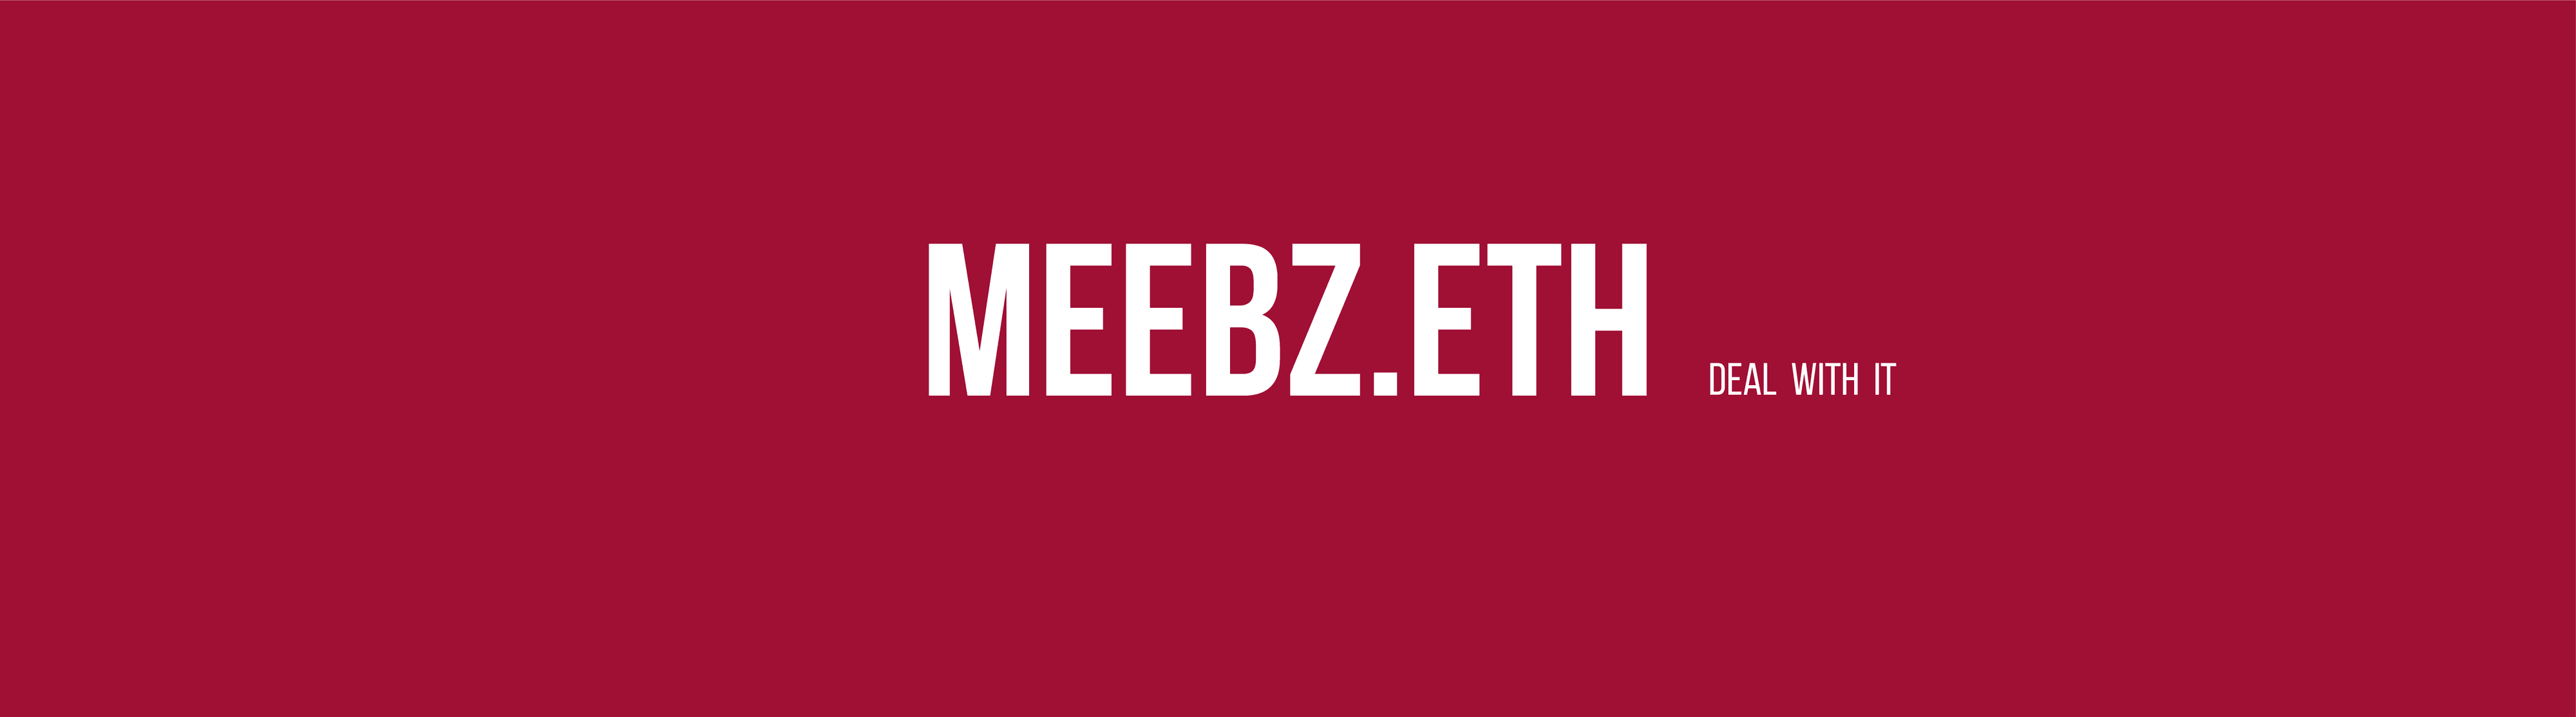 meebz banner